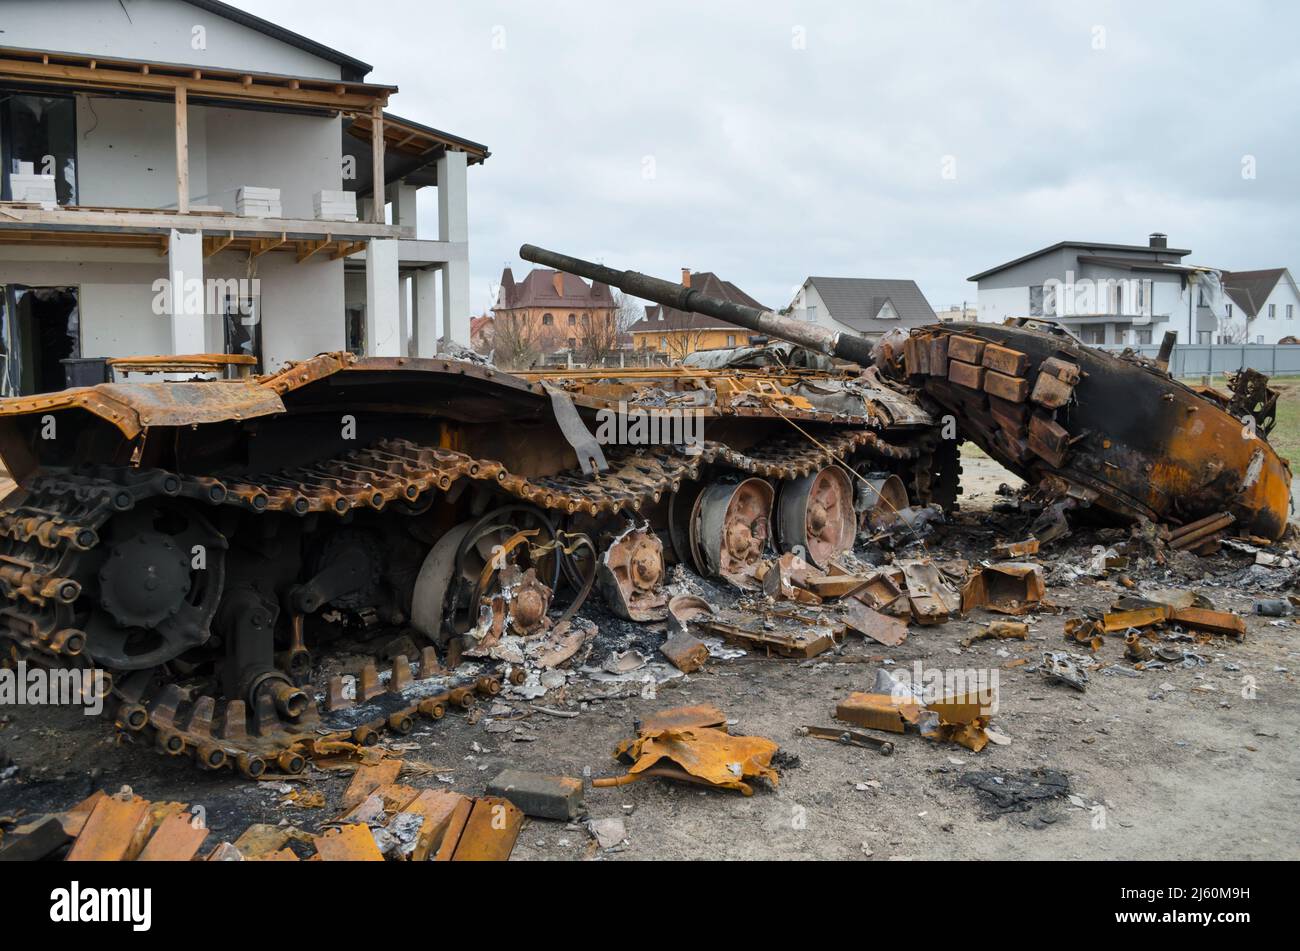 Dmytrivka village, Kyiv region, Ukraine - April 13, 2022: Destroyed Russian tank following the Ukrainian forces counter-attacks. Stock Photo